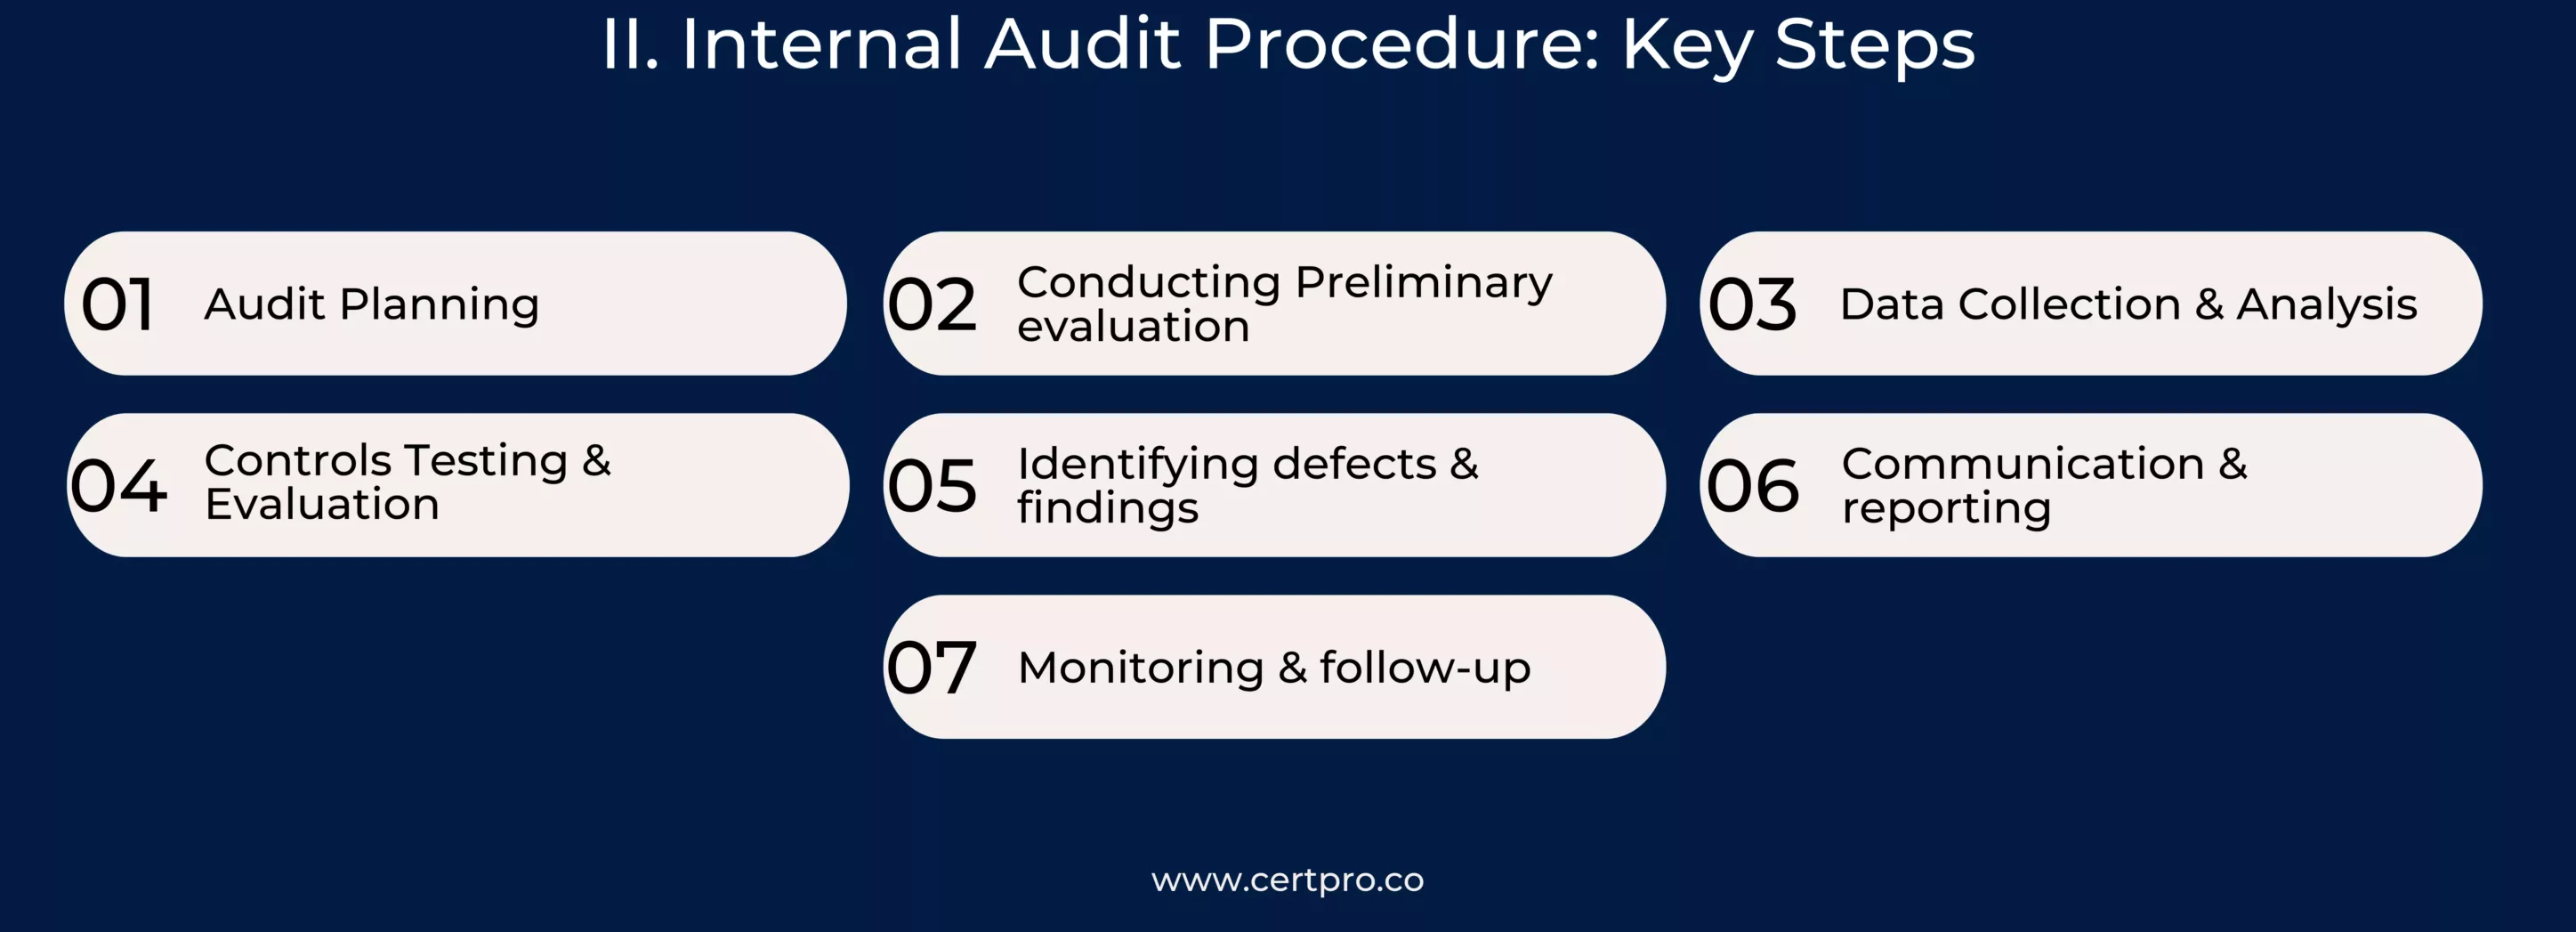 Internal Audit Procedure Key Steps